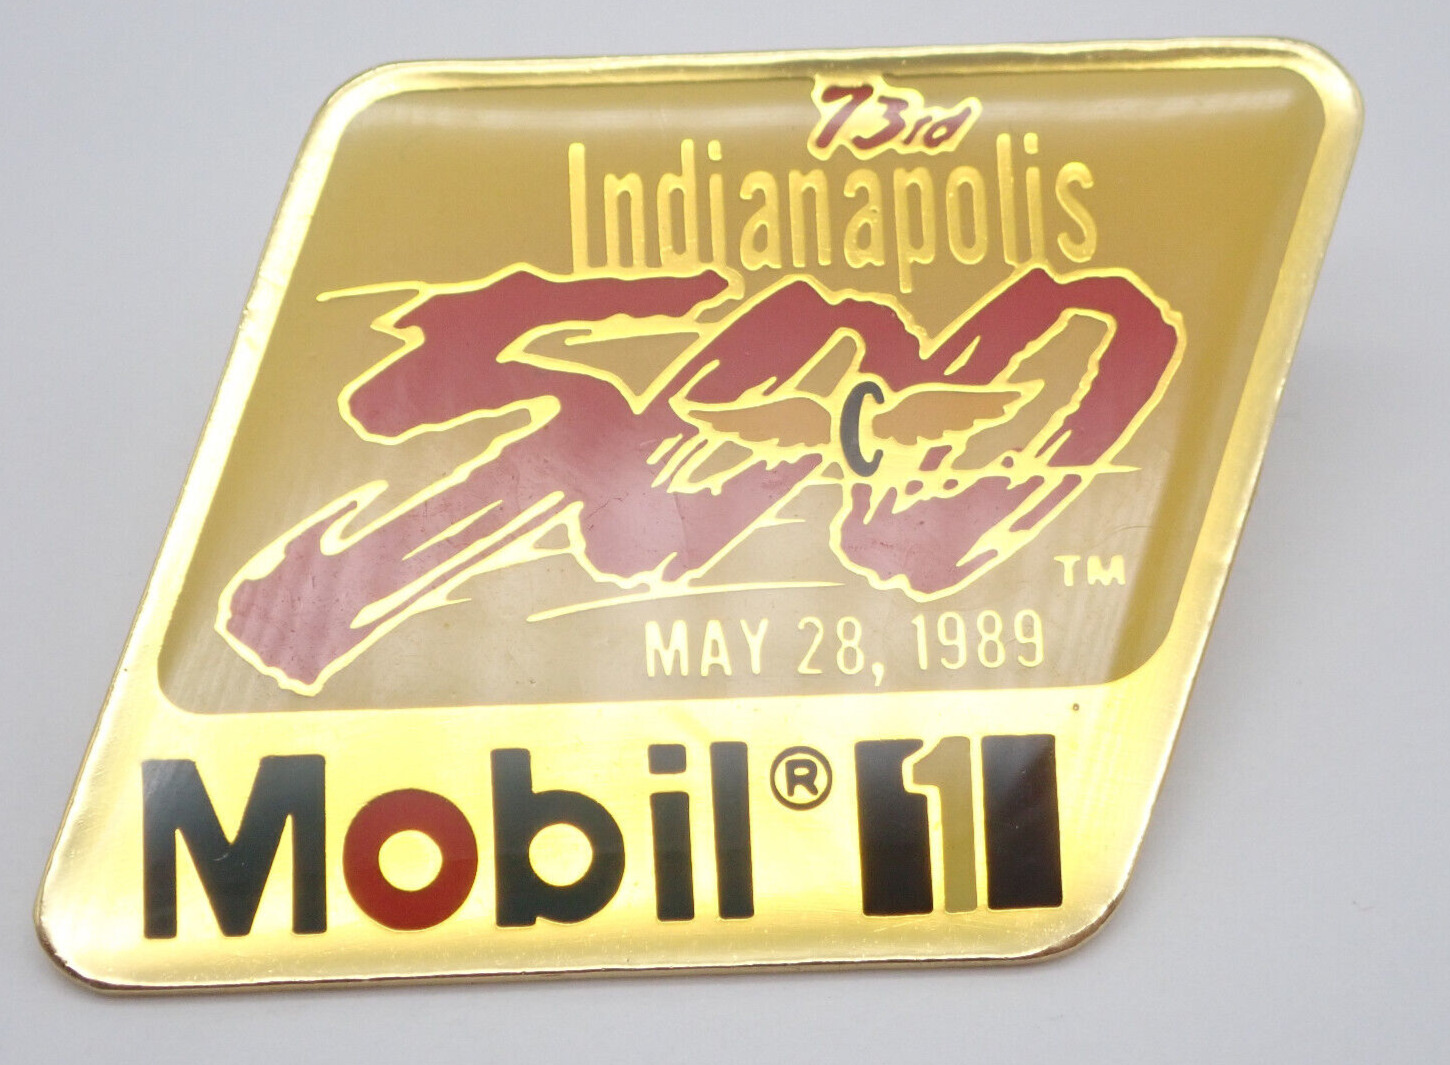 Indianapolis 500 Mobile 1 1989 Vintage Lapel Pin